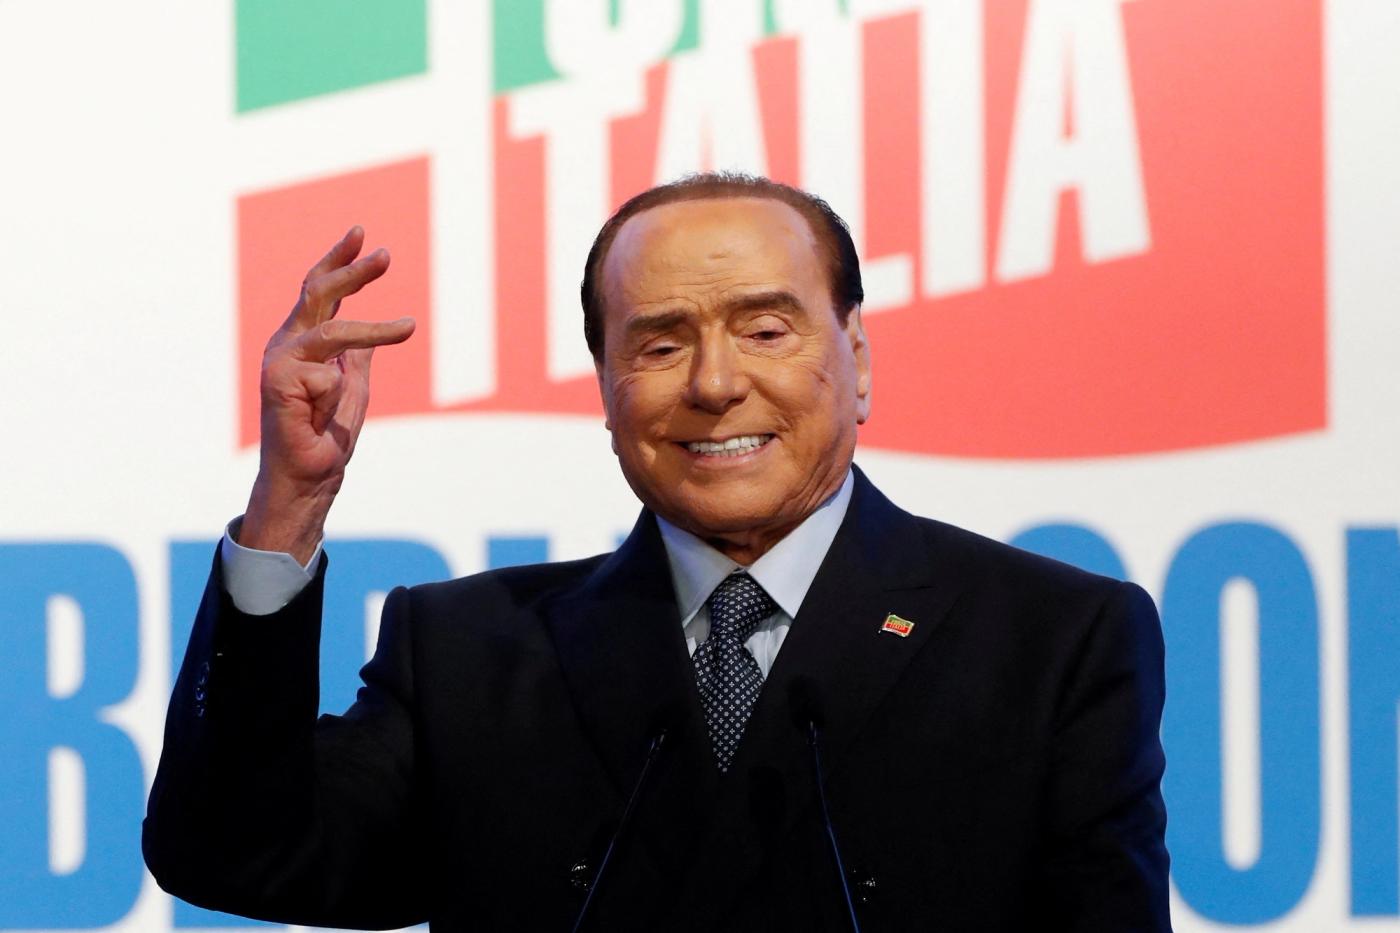 Former Italian Prime Minister and leader of the Forza Italia (Go Italy!) party Silvio Berlusconi attends a rally in Rome, Italy, April 9, 2022. REUTERS/Remo Casilli/File Photo